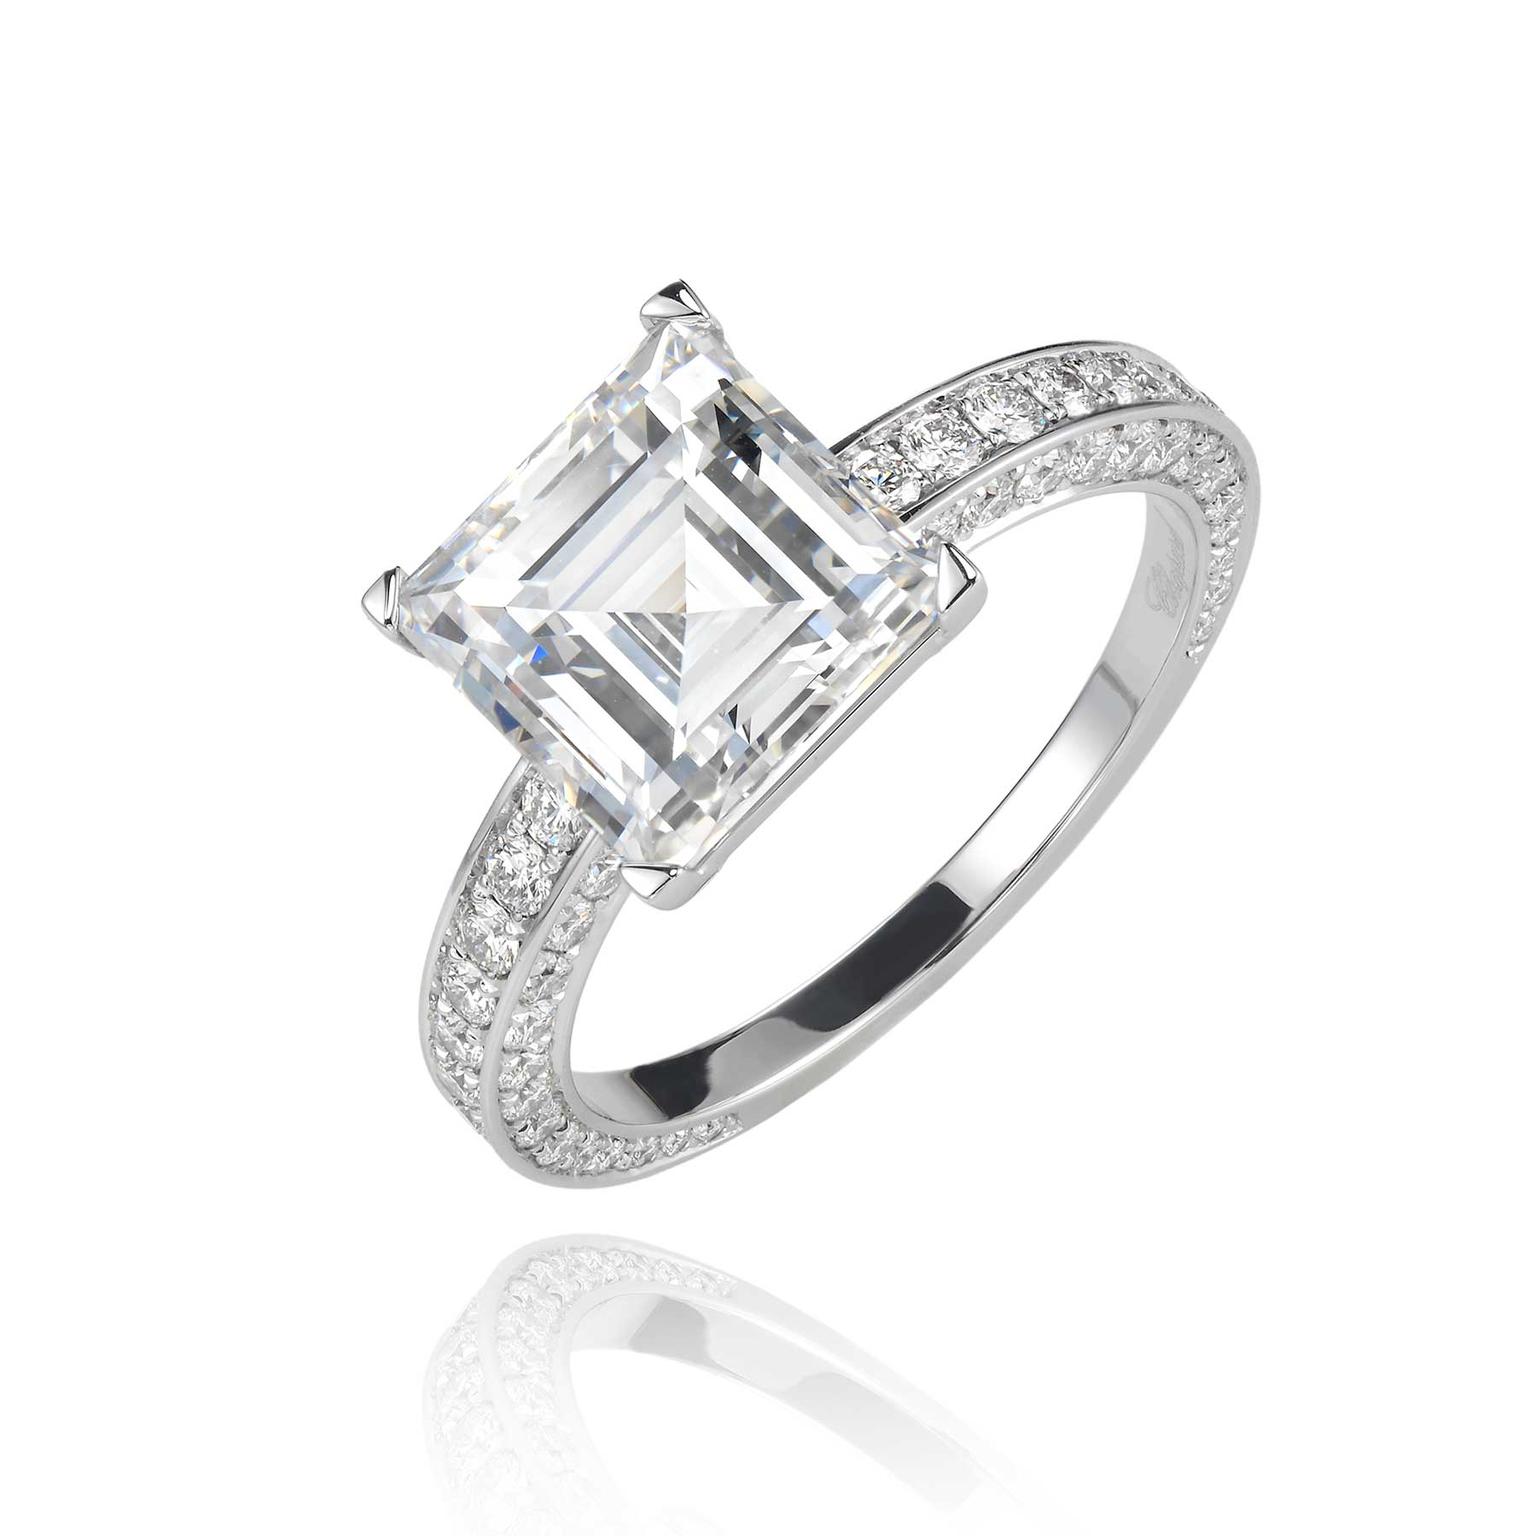 Chopard step-cut diamond engagement ring